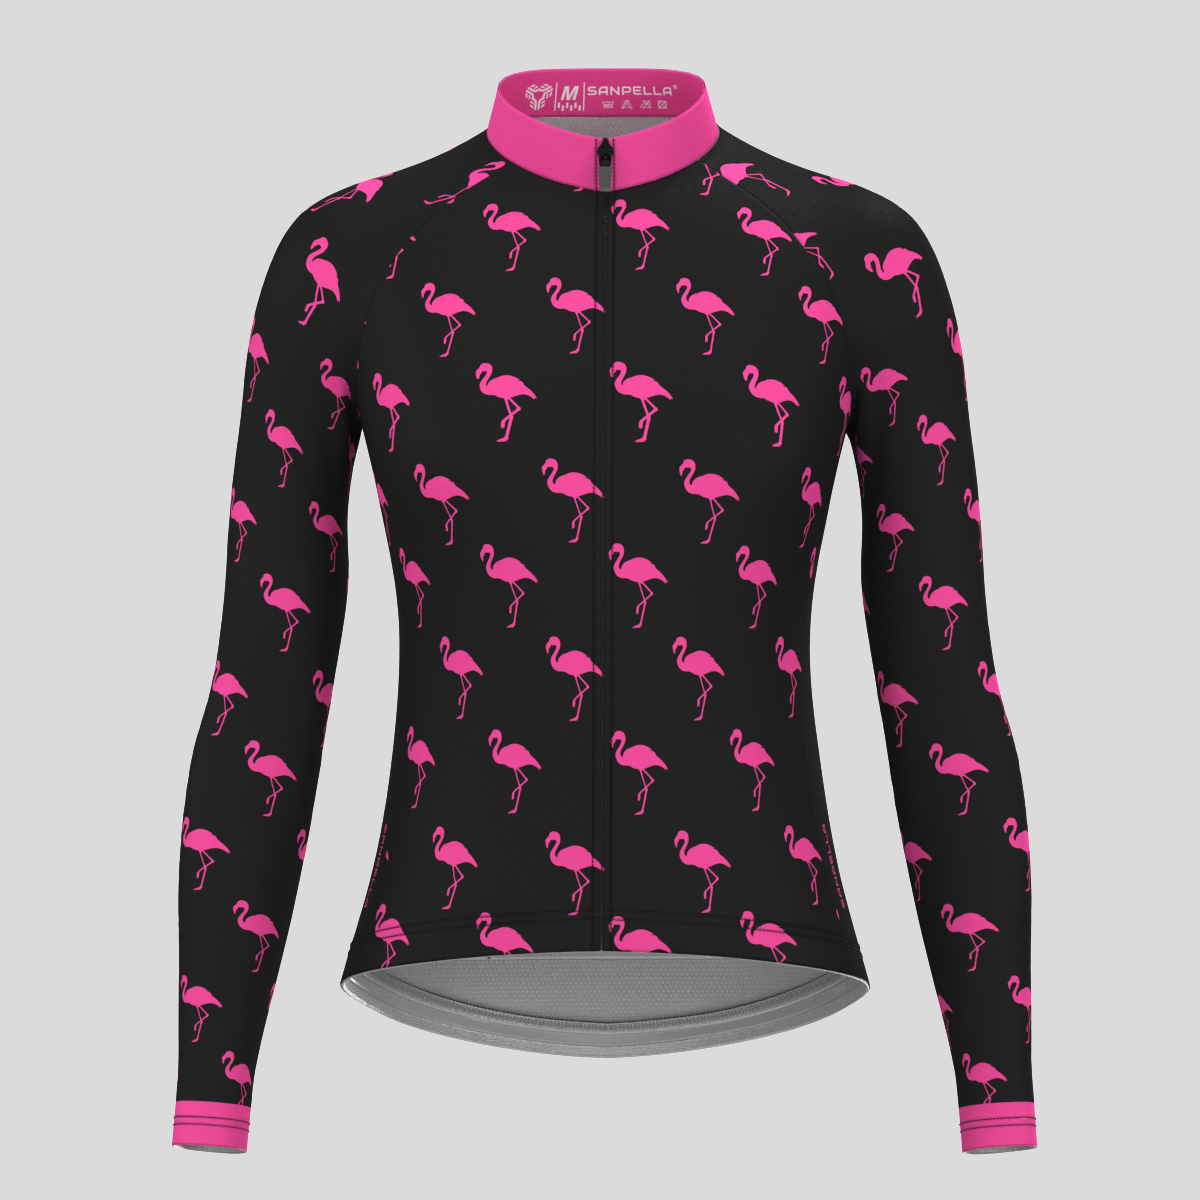 Flamingo Women's LS Cycling Jersey - Pink/Black